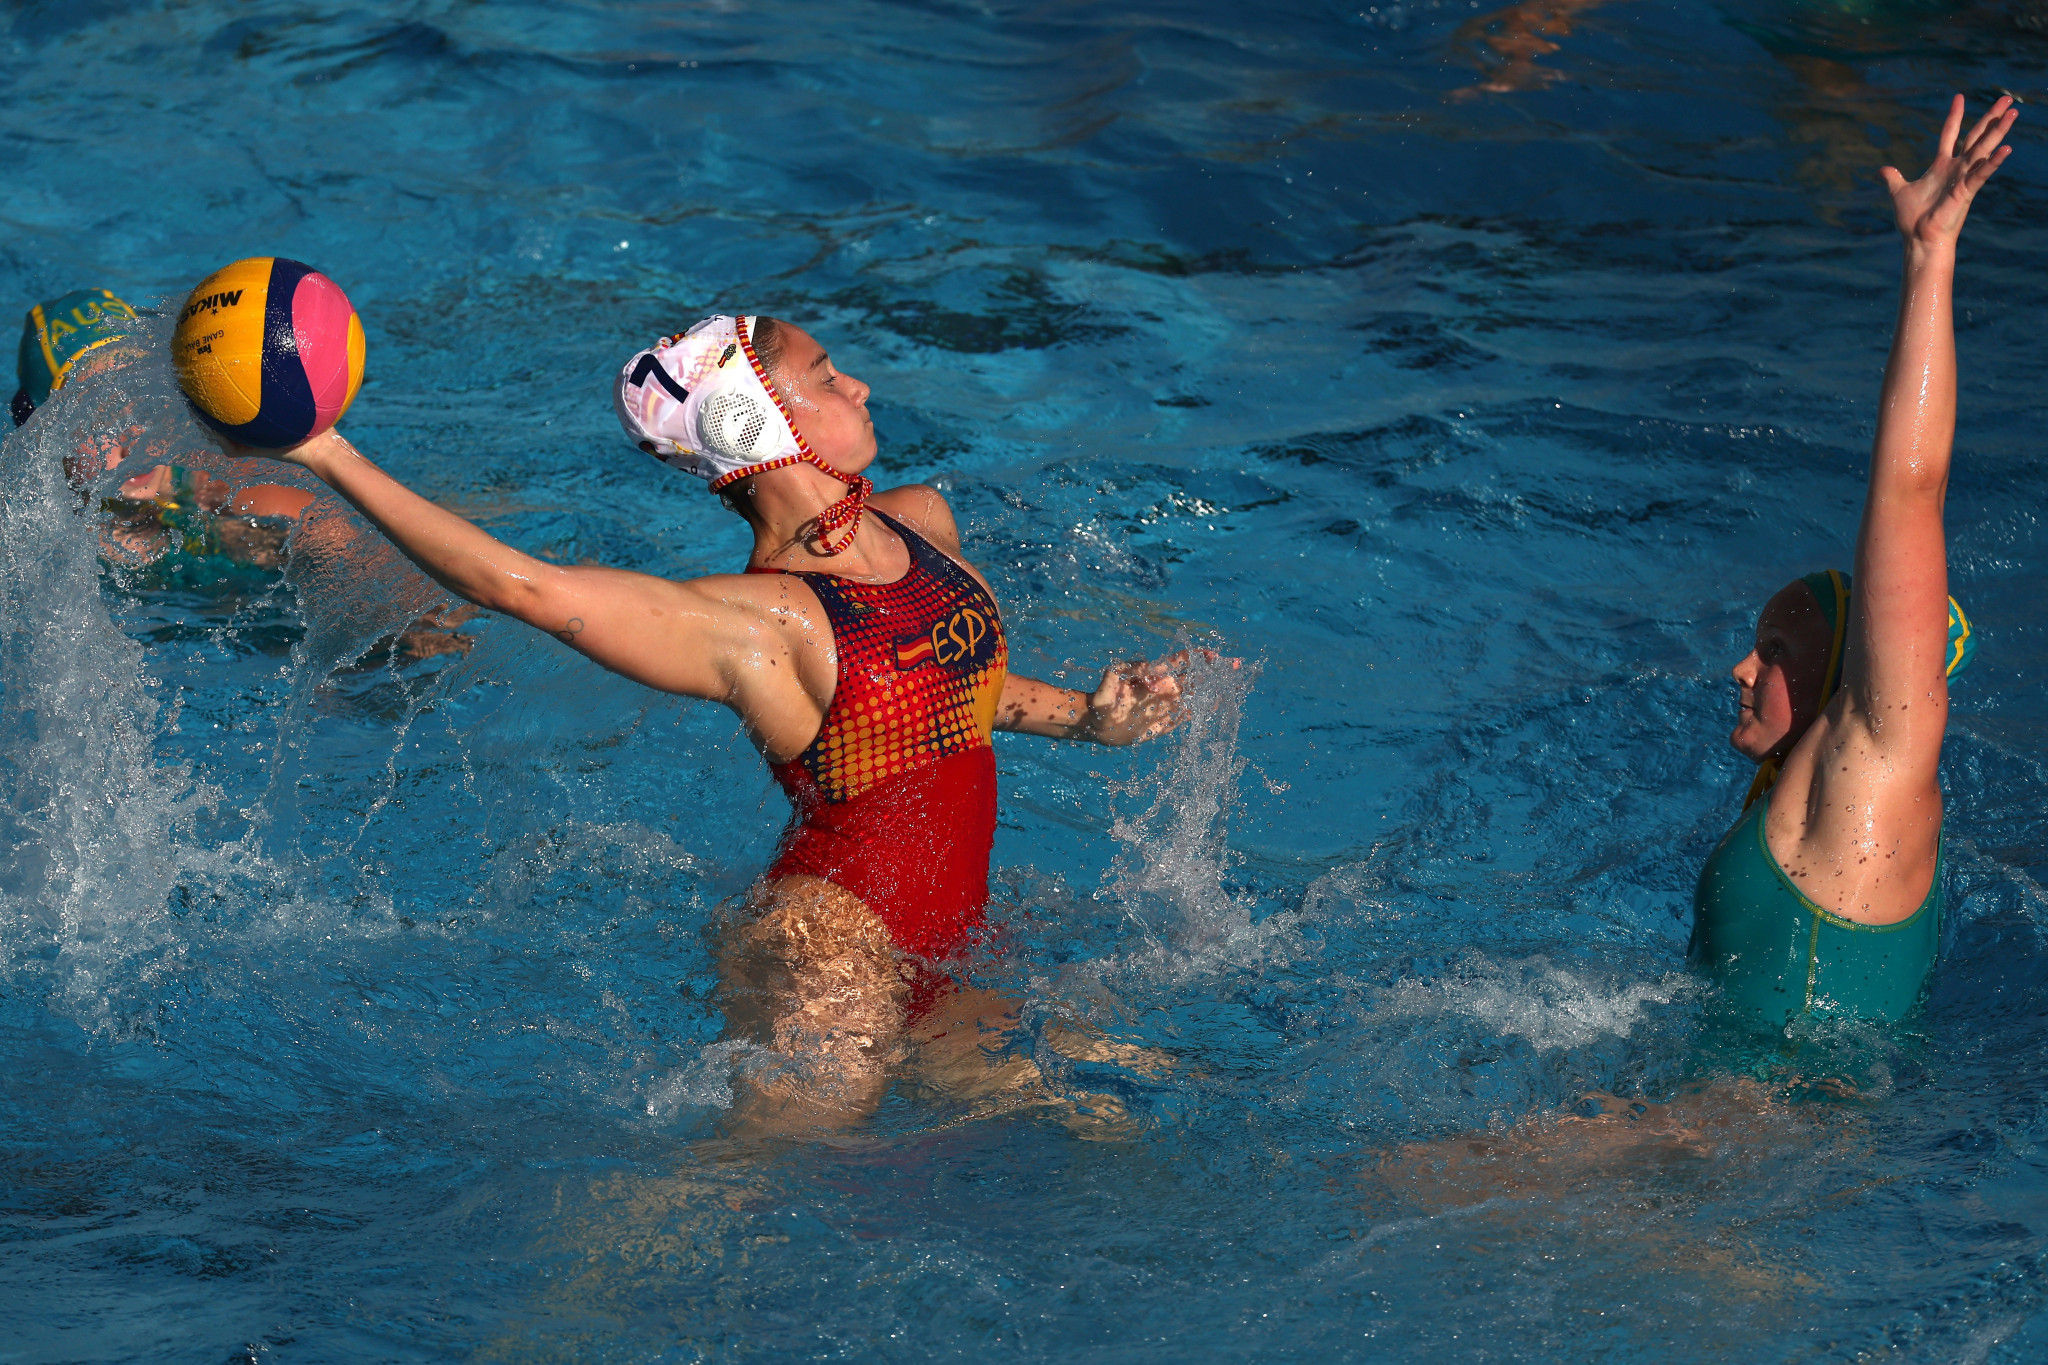 Spain edge Greece to retain Women’s European Water Polo Championship crown